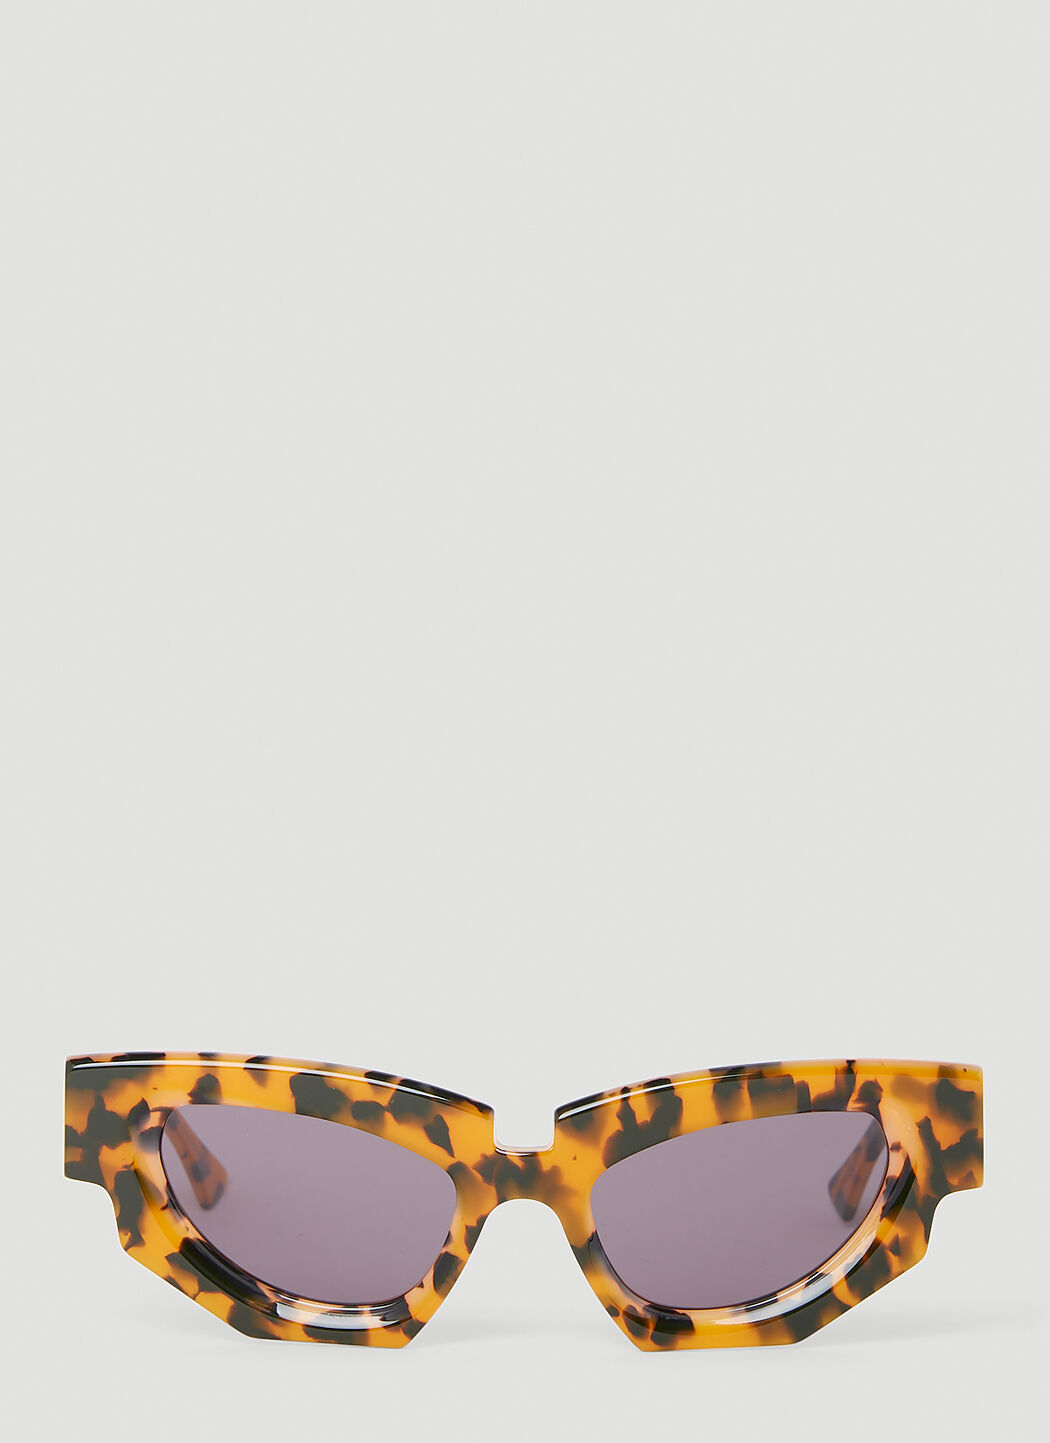 Kuboraum F5 Tortoiseshell Sunglasses Black kub0354007